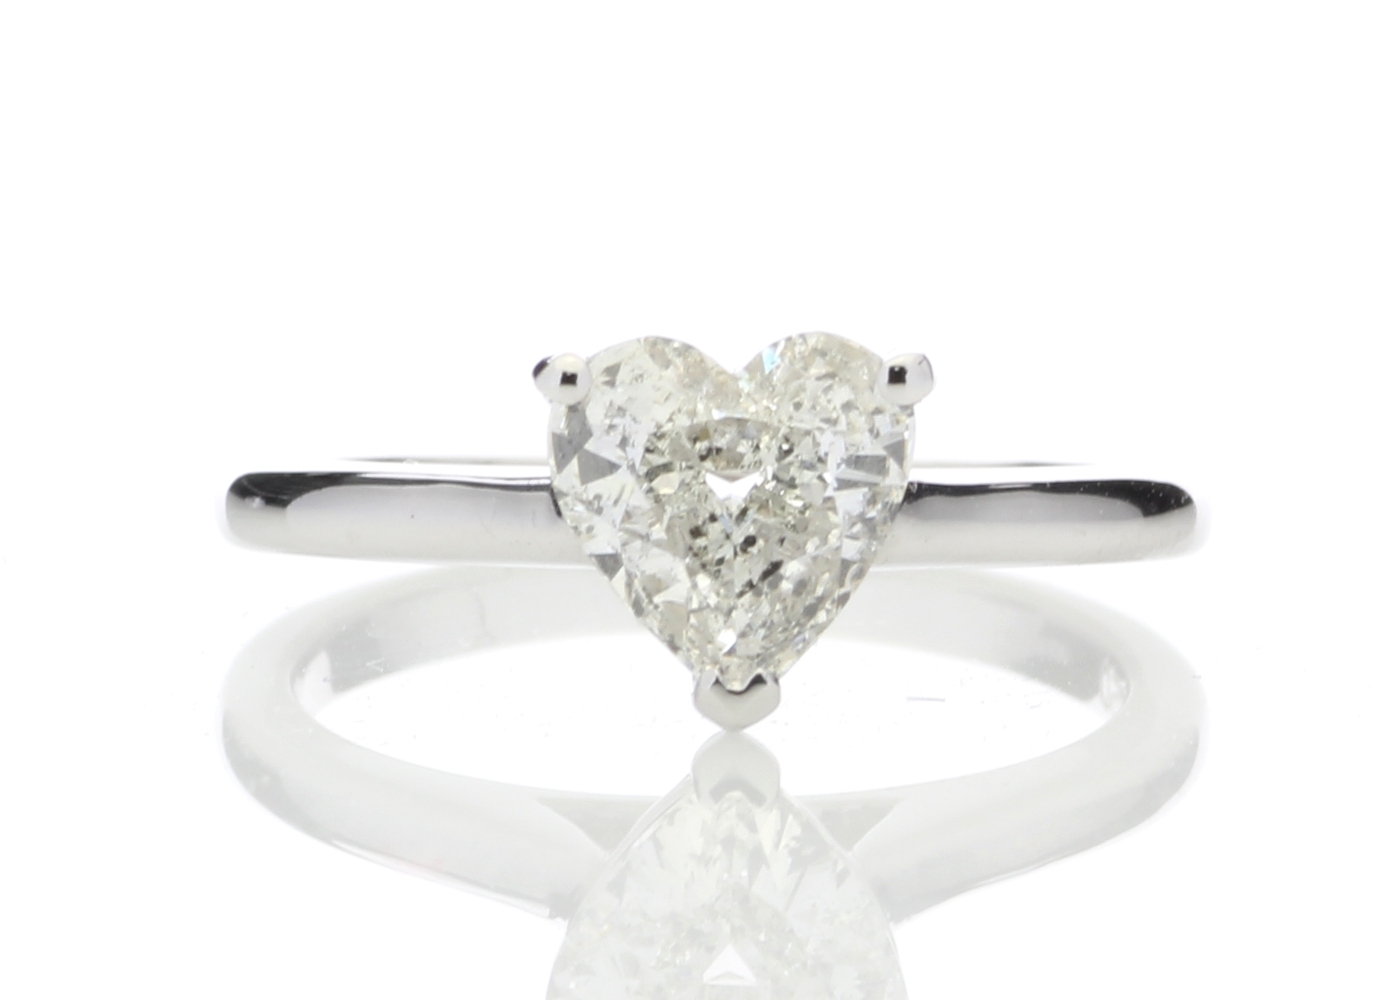 18ct White Gold Single Stone Heart Cut Diamond Ring 1.04 Carats - Image 3 of 5